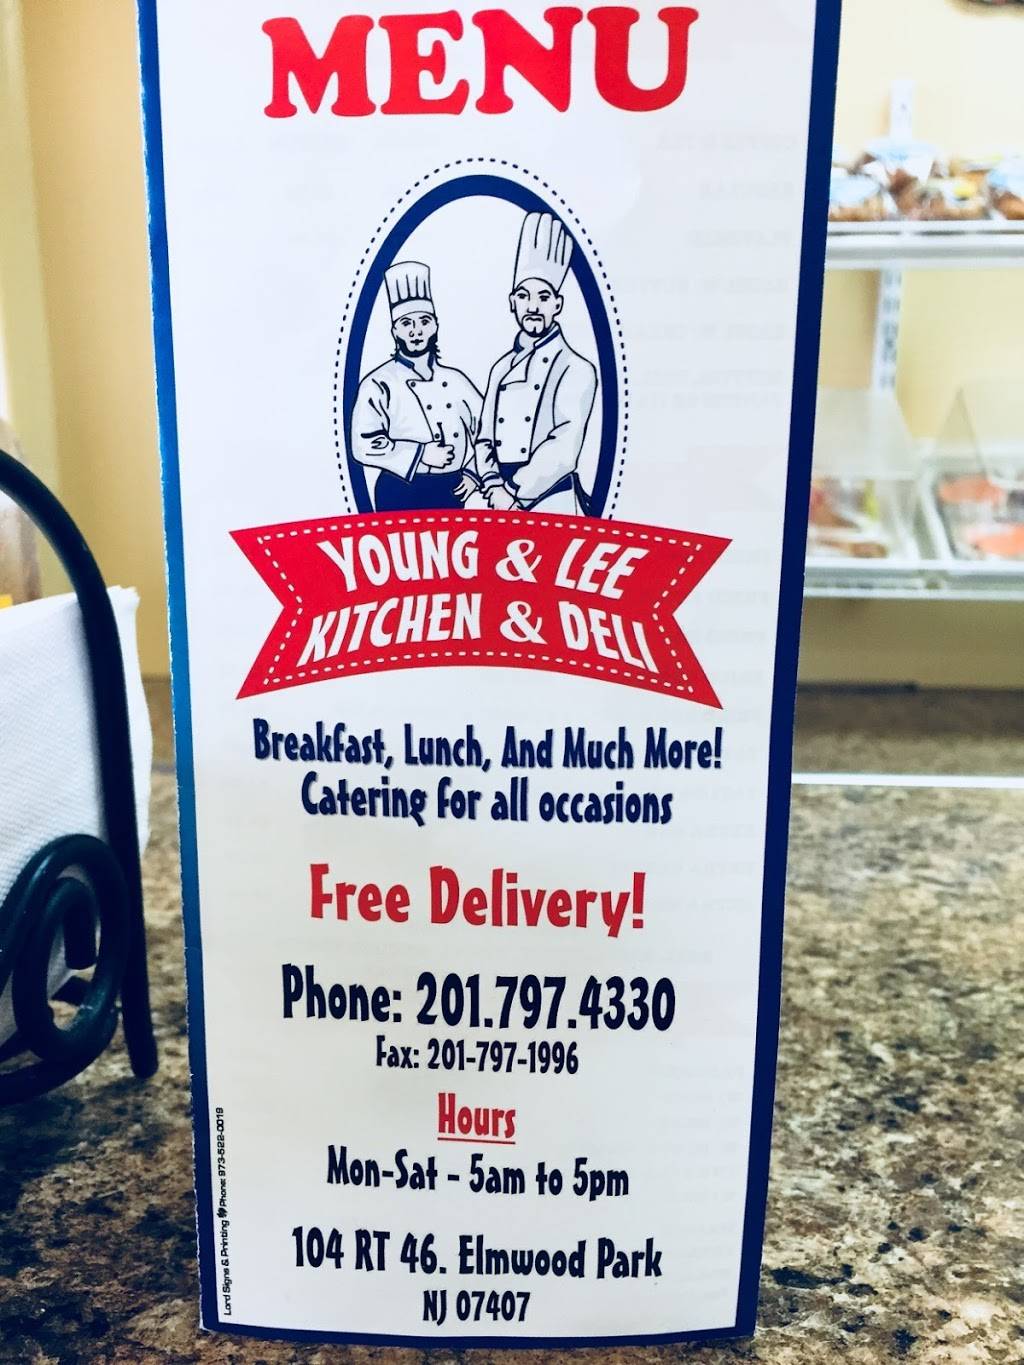 Young & Lee Kitchen & Deli | restaurant | 104 US-46, Elmwood Park, NJ 07407, USA | 2017974330 OR +1 201-797-4330